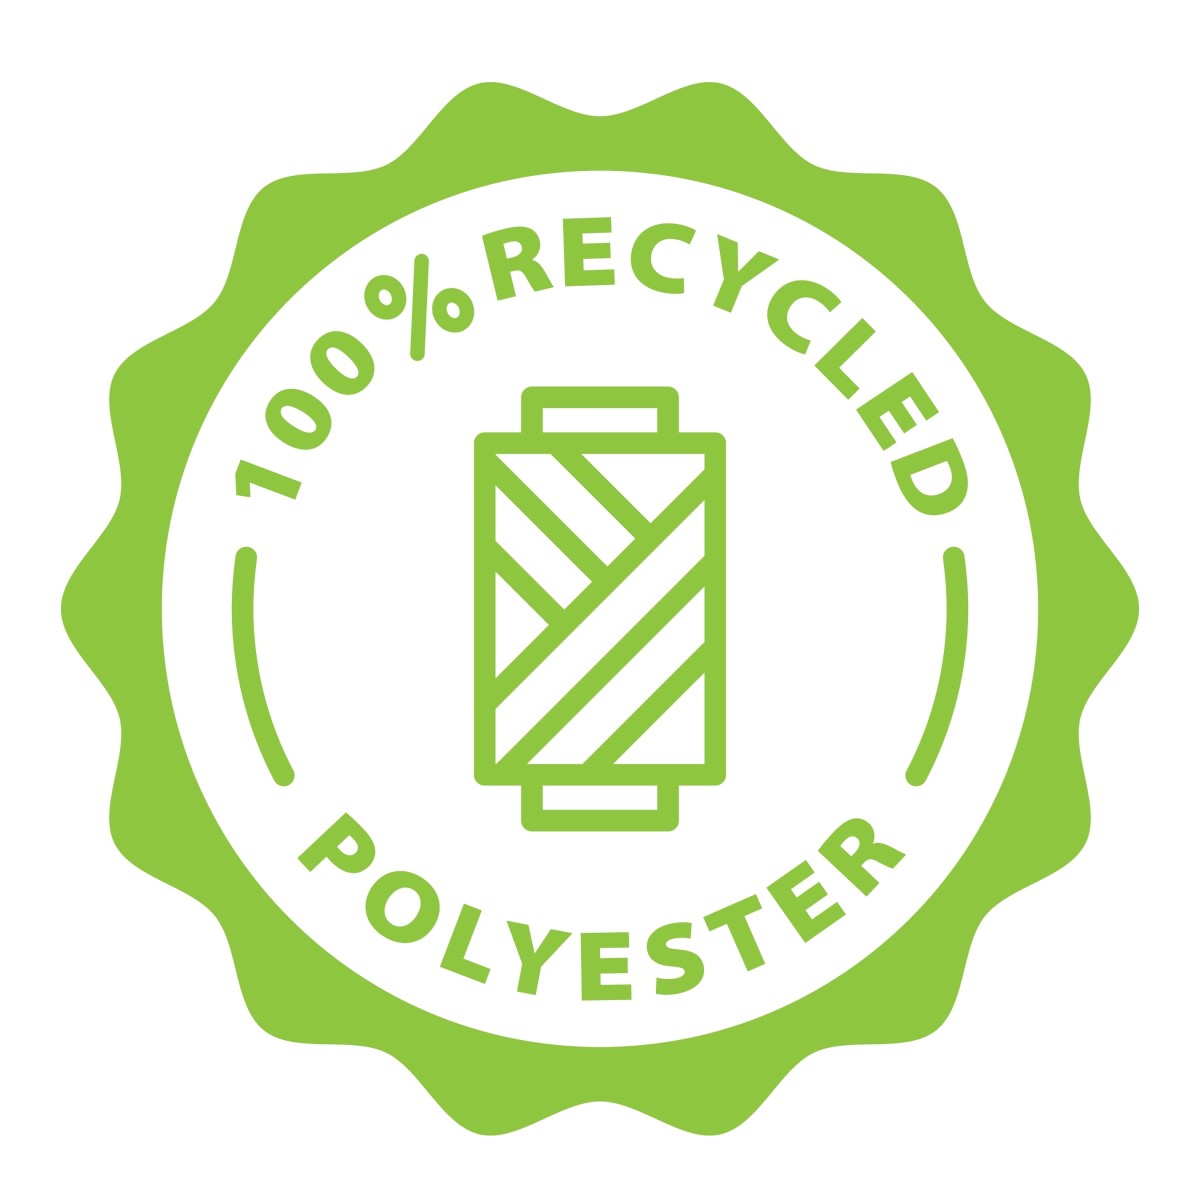 Oznaka Recycled Poliester (slika je simbolična)